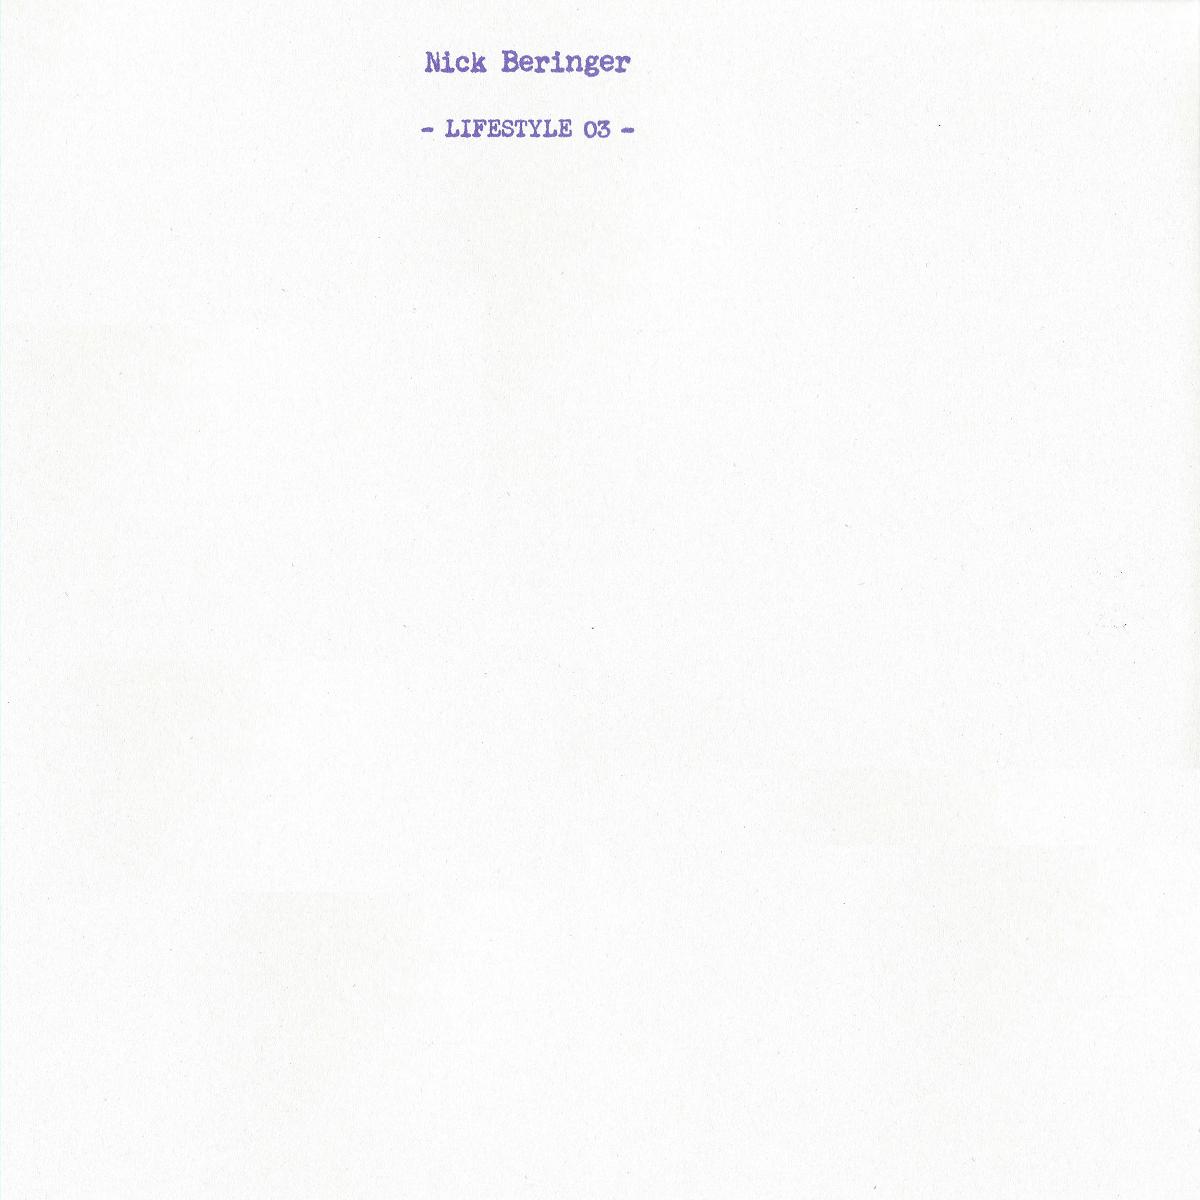 image cover: Nick Beringer - Lifehouse 03 / Lifestyle